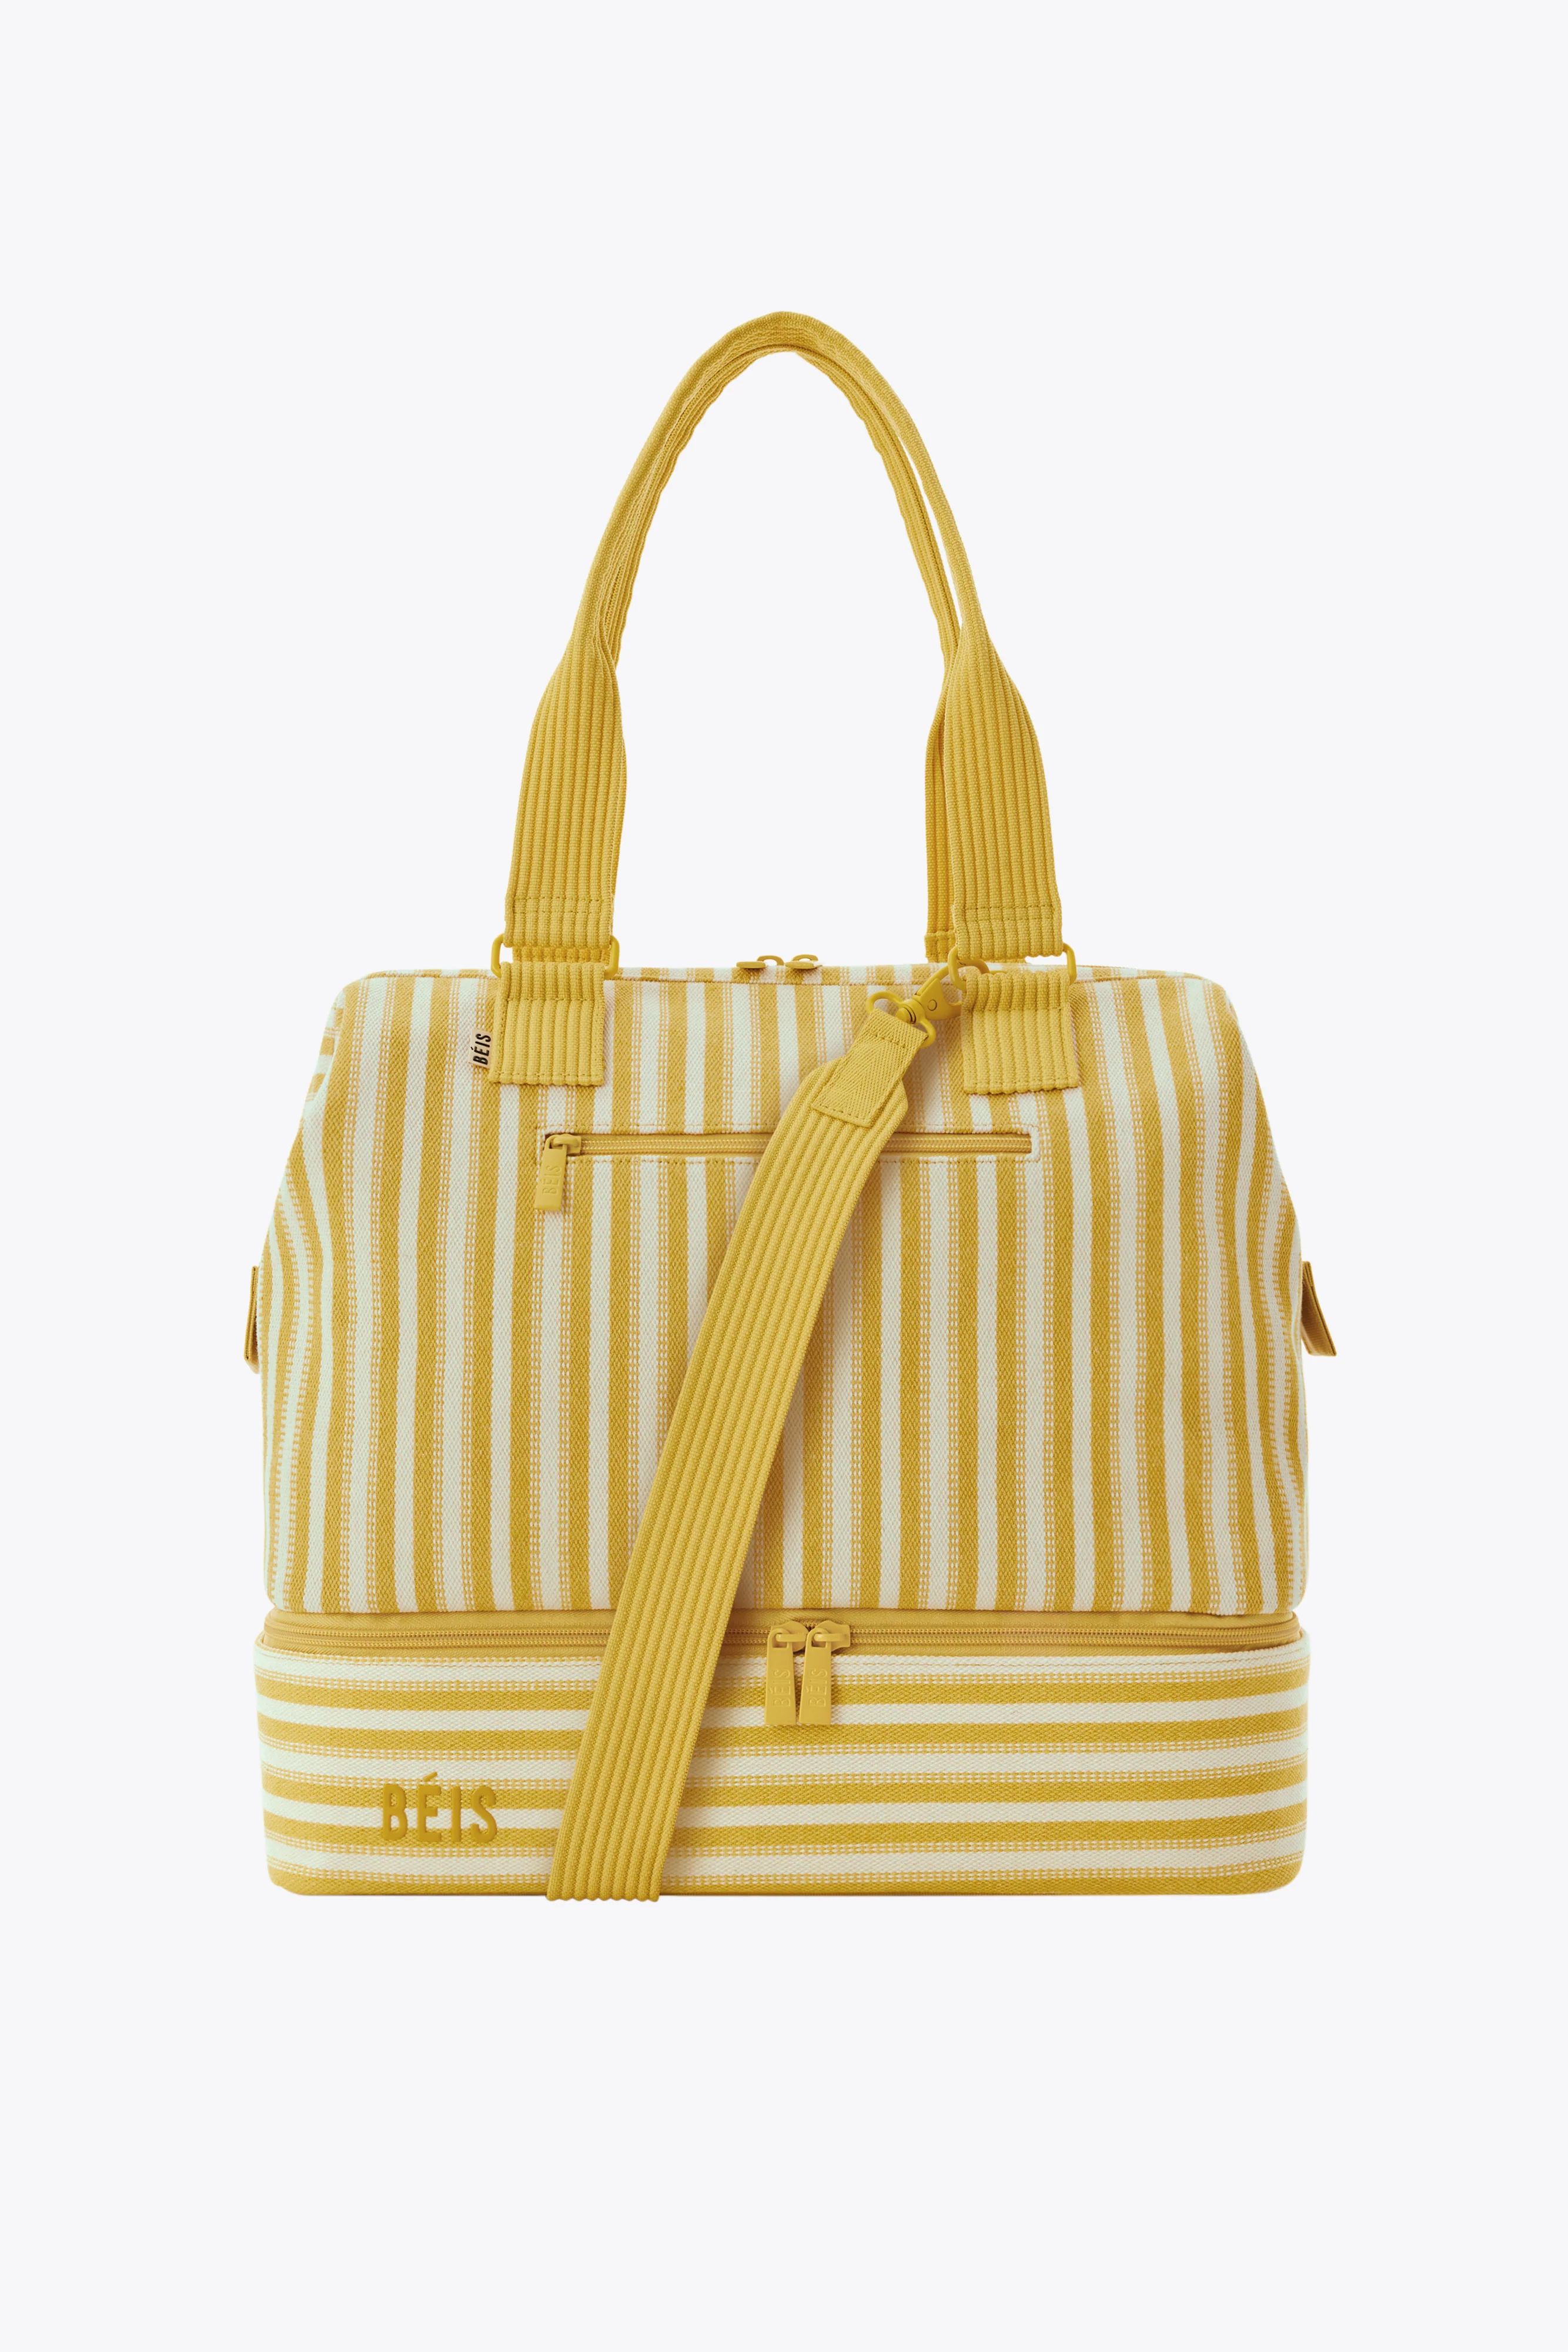 BÉIS 'The Mini Weekender' in Honey Stripe - Yellow Striped Small Weekend & Overnight Bag | BÉIS Travel